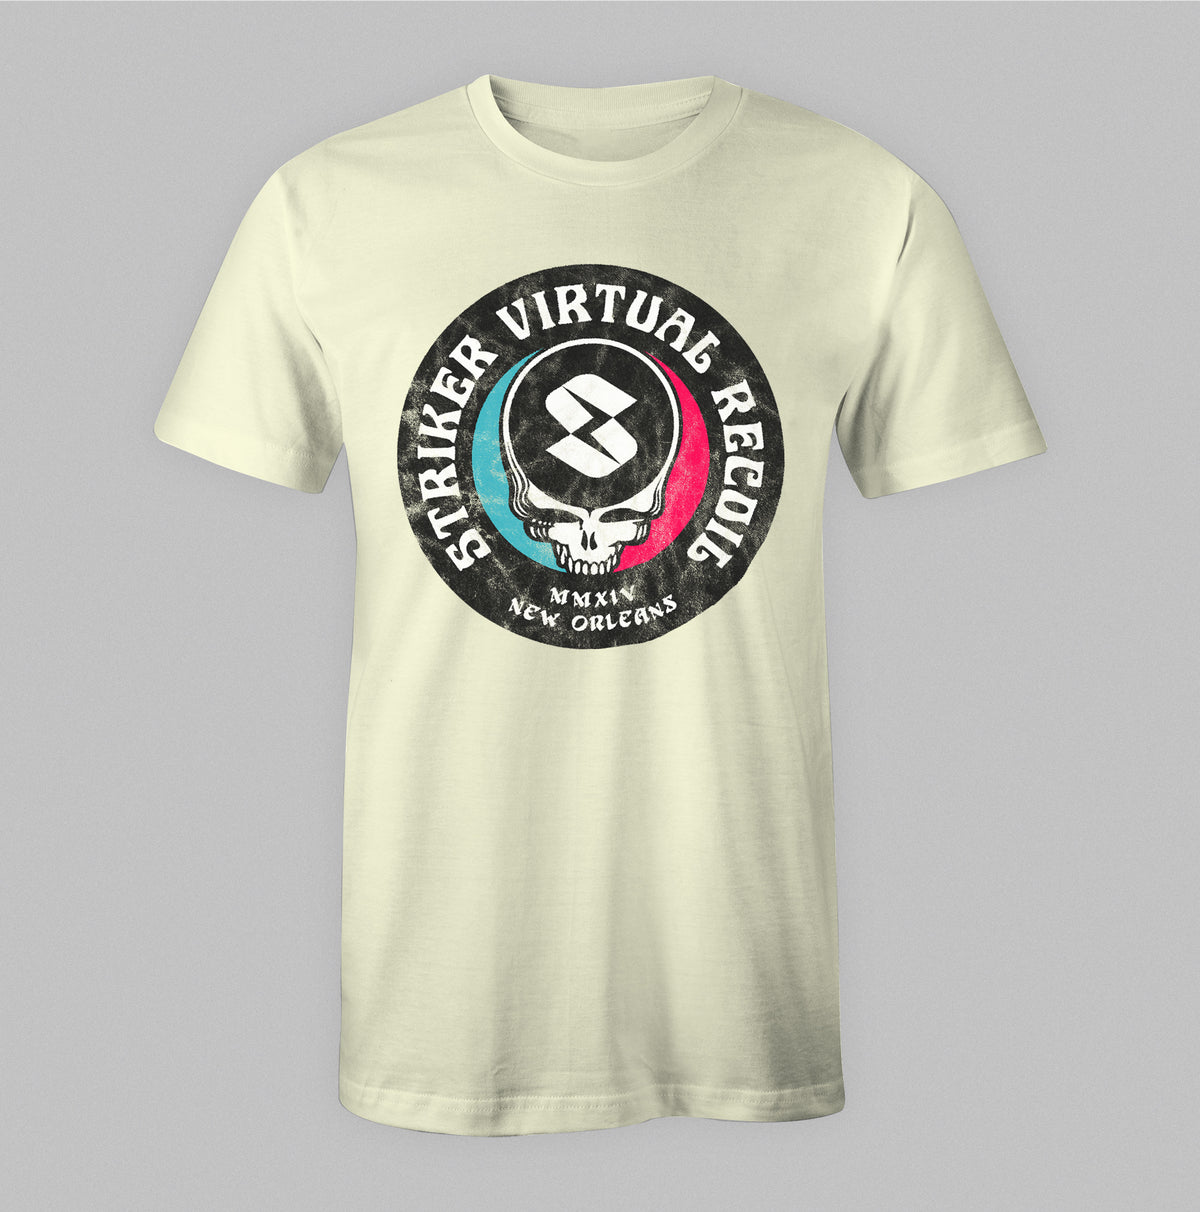 Shakedown Striker T-Shirt